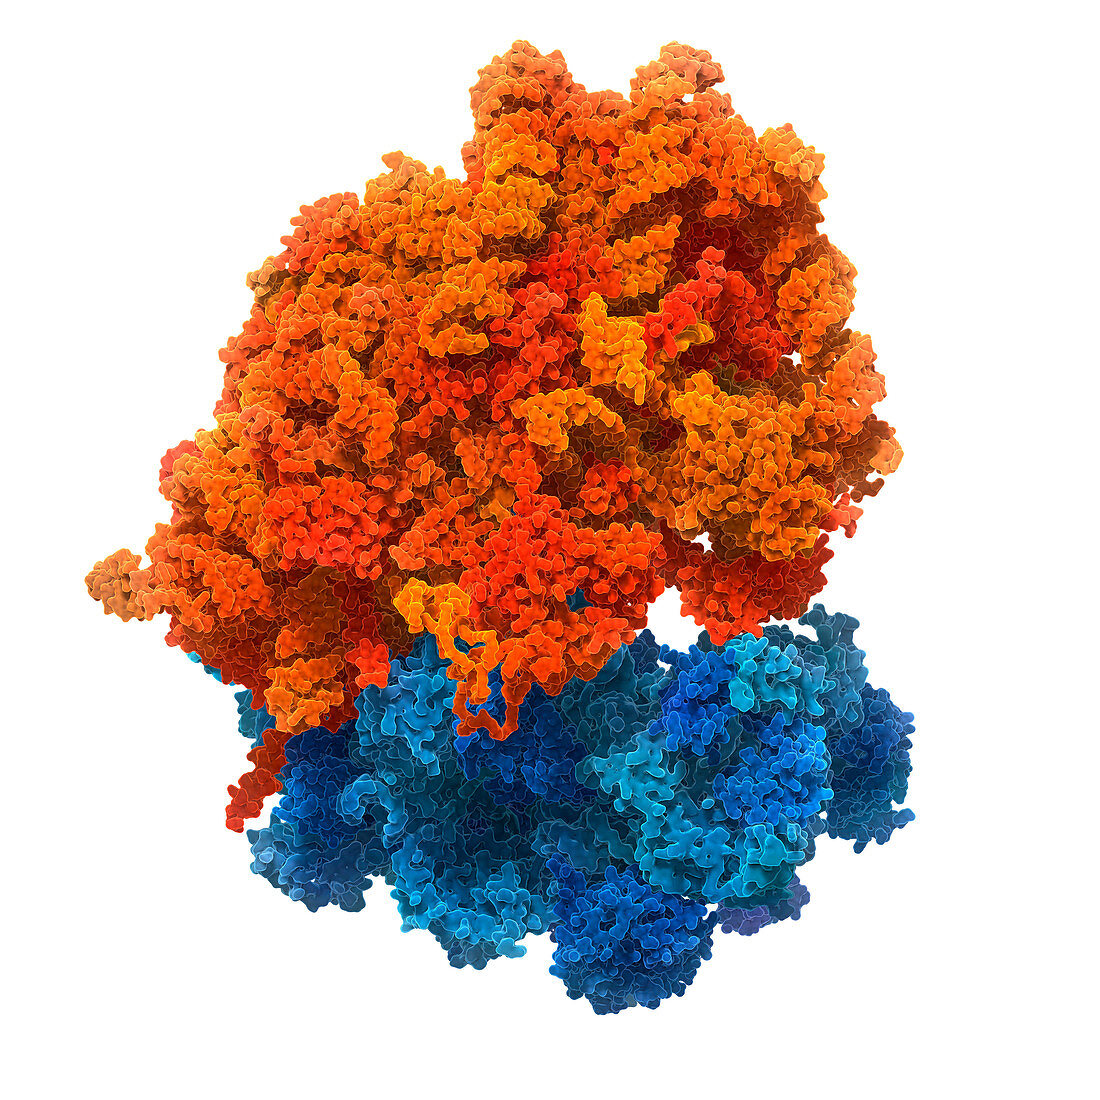 Human ribosome, illustration